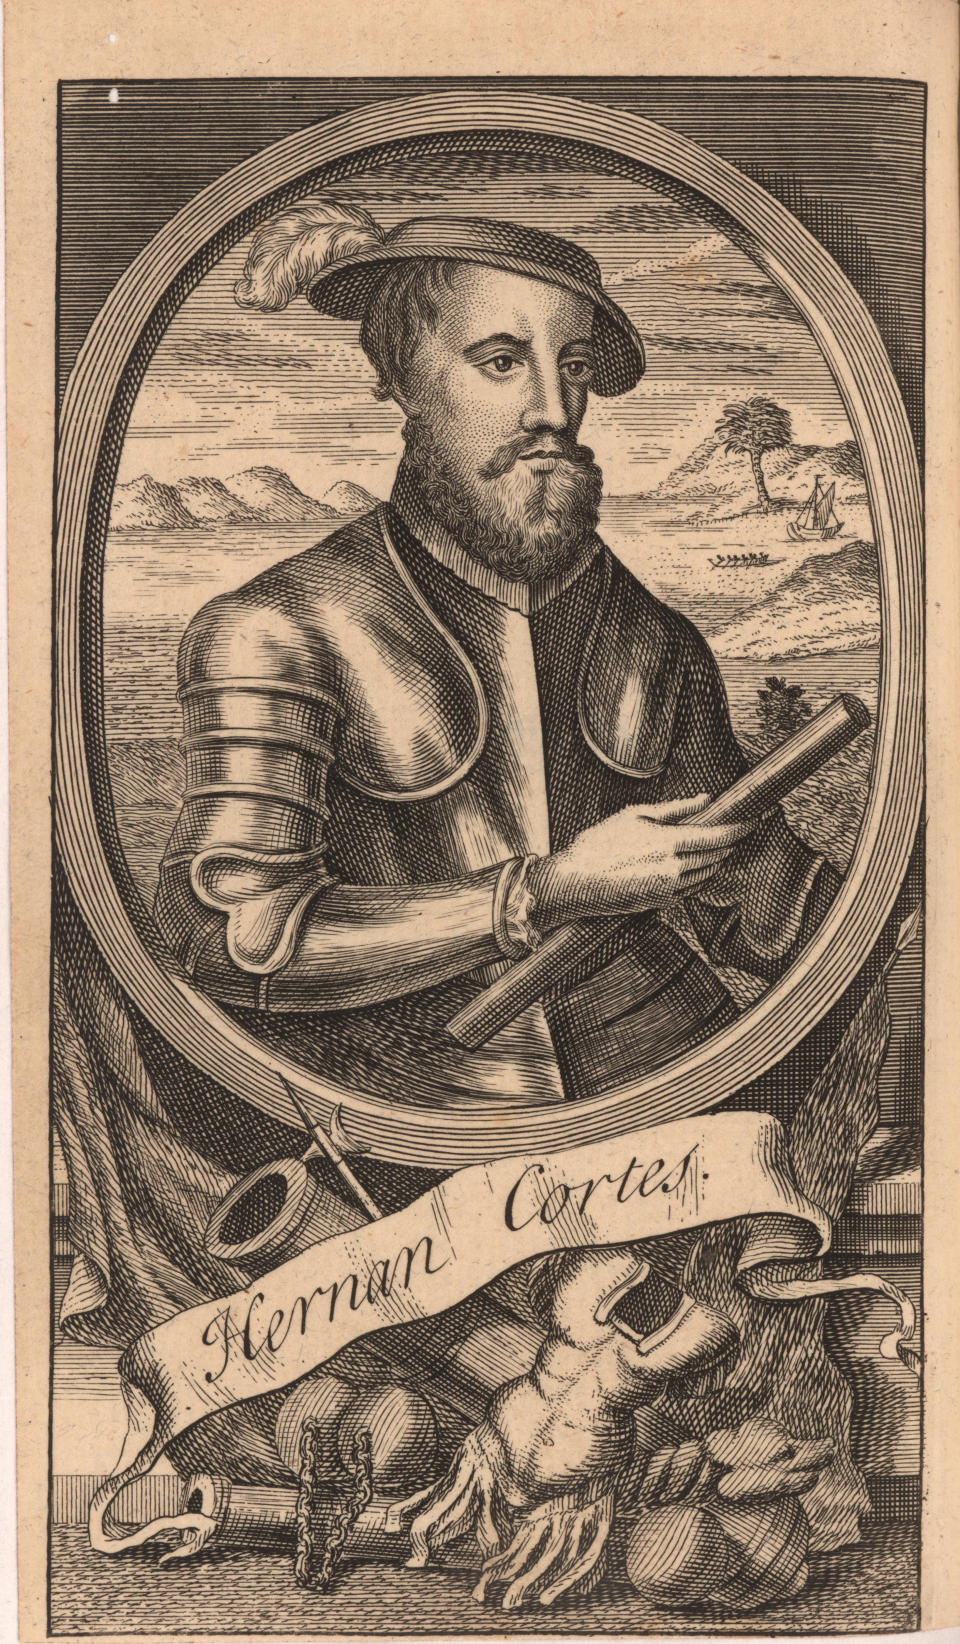 Der spanische Konquistador Hernán Cortés. (Bild: Fine Art Images/Heritage Images/Getty Images)